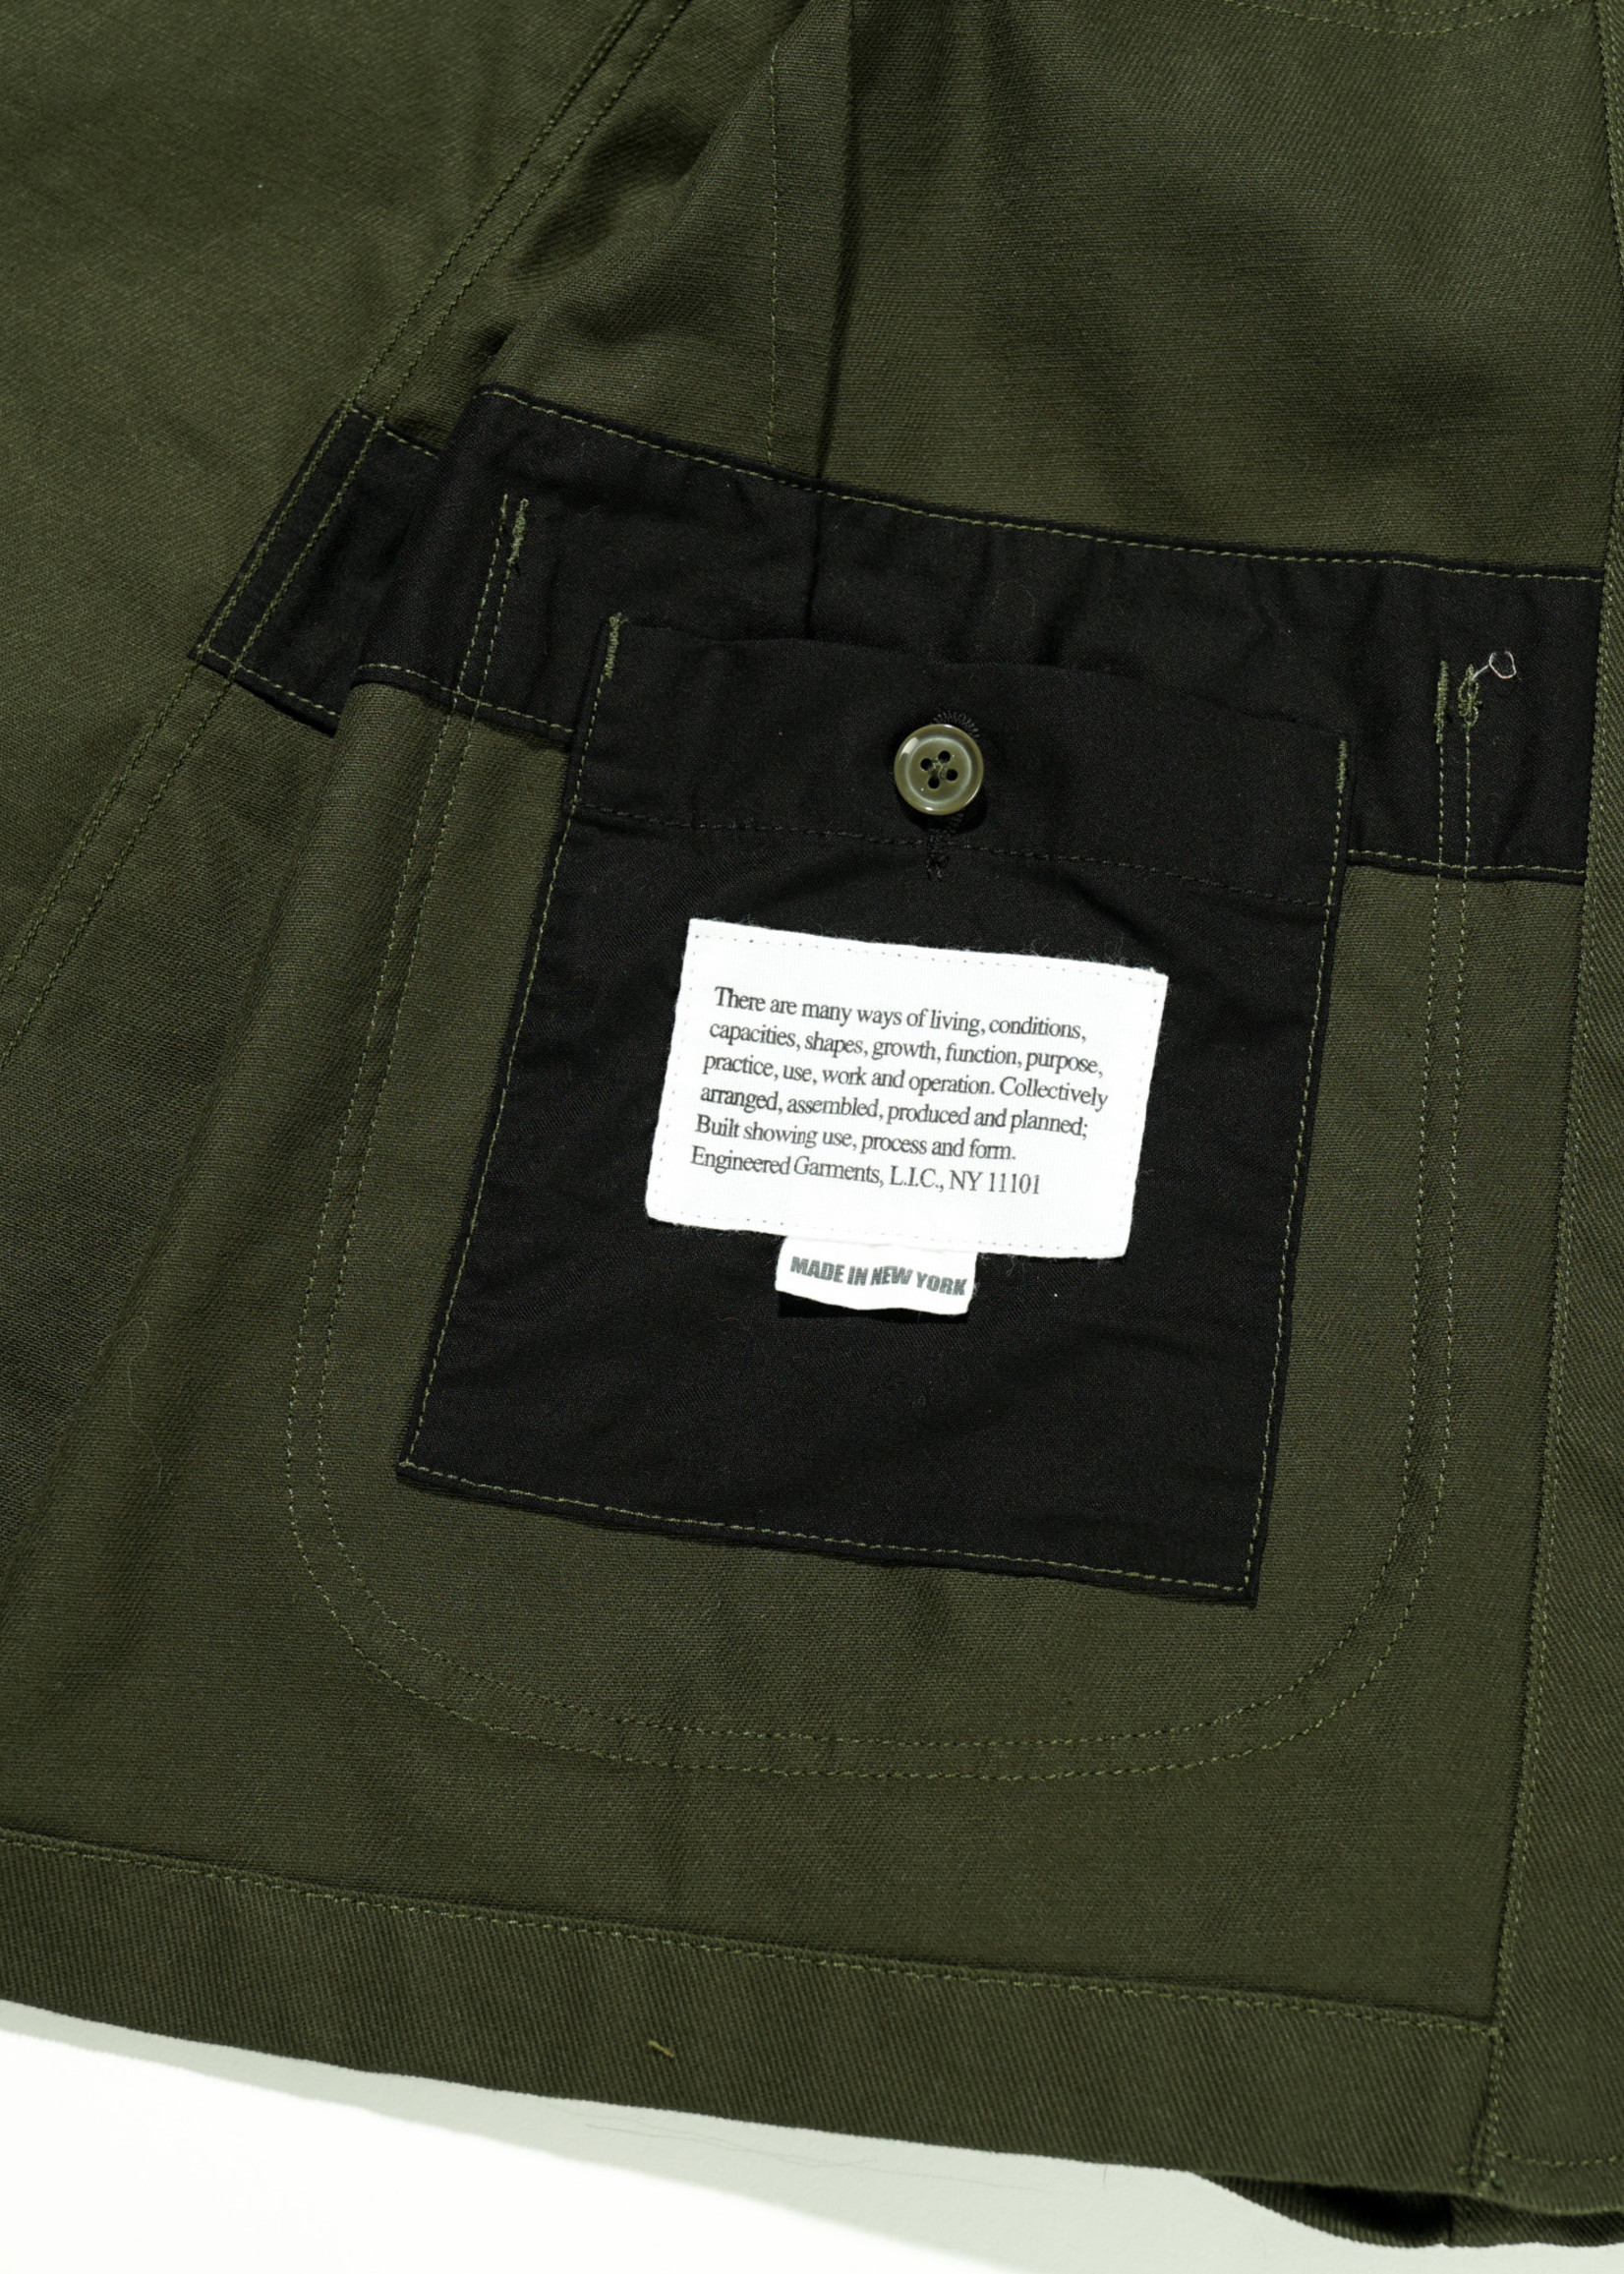 Engineered Garments Engineered Garments Bedford Jacket Olive Cotton Heavy Twill